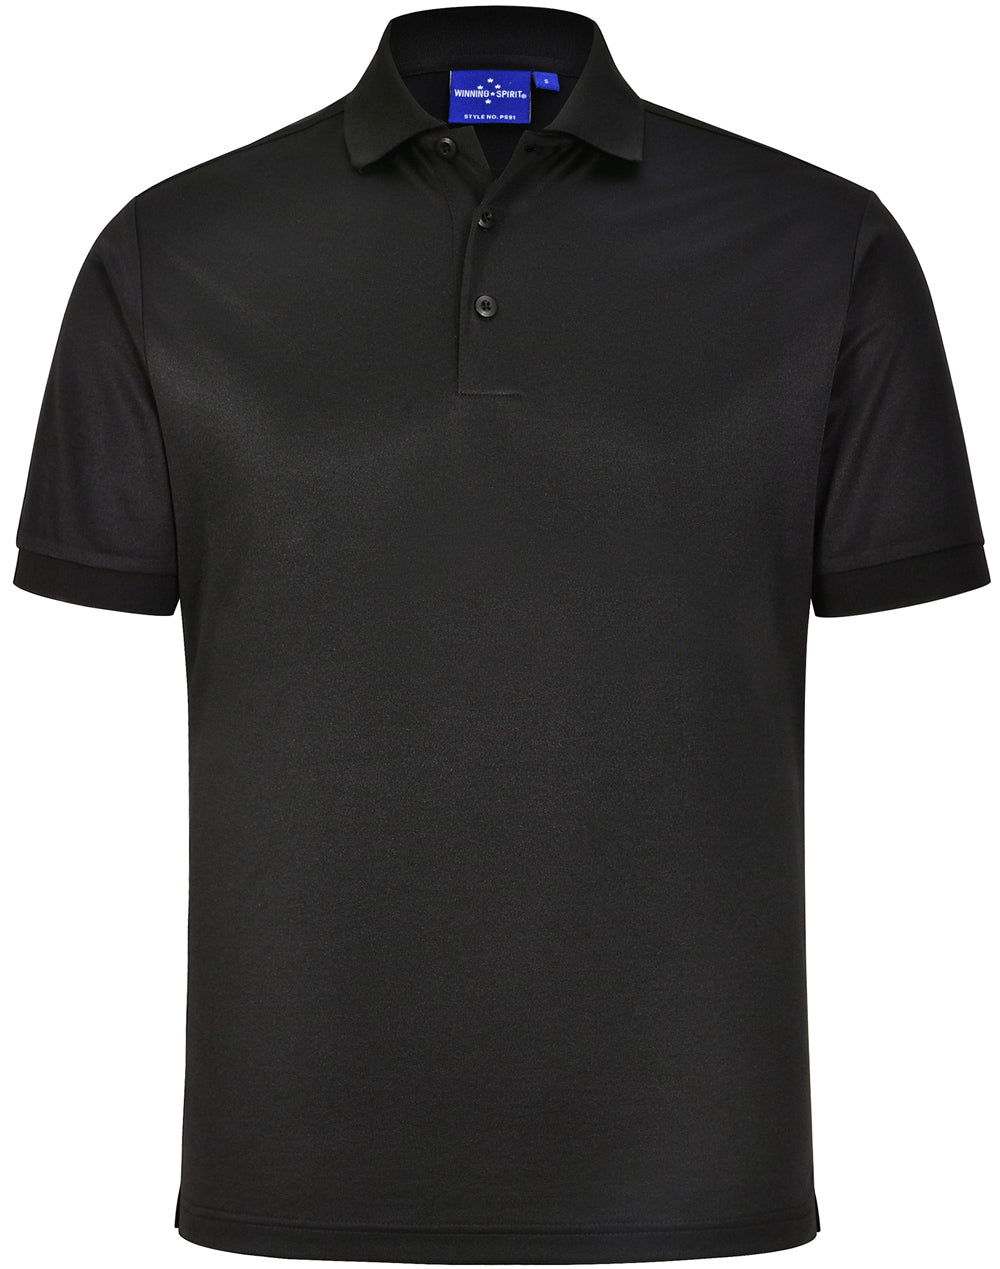 Winning Spirit Men's Sustainable Poly/Cotton Corporate Polo Shirt PS91 Casual Wear Winning Spirit Black XS 